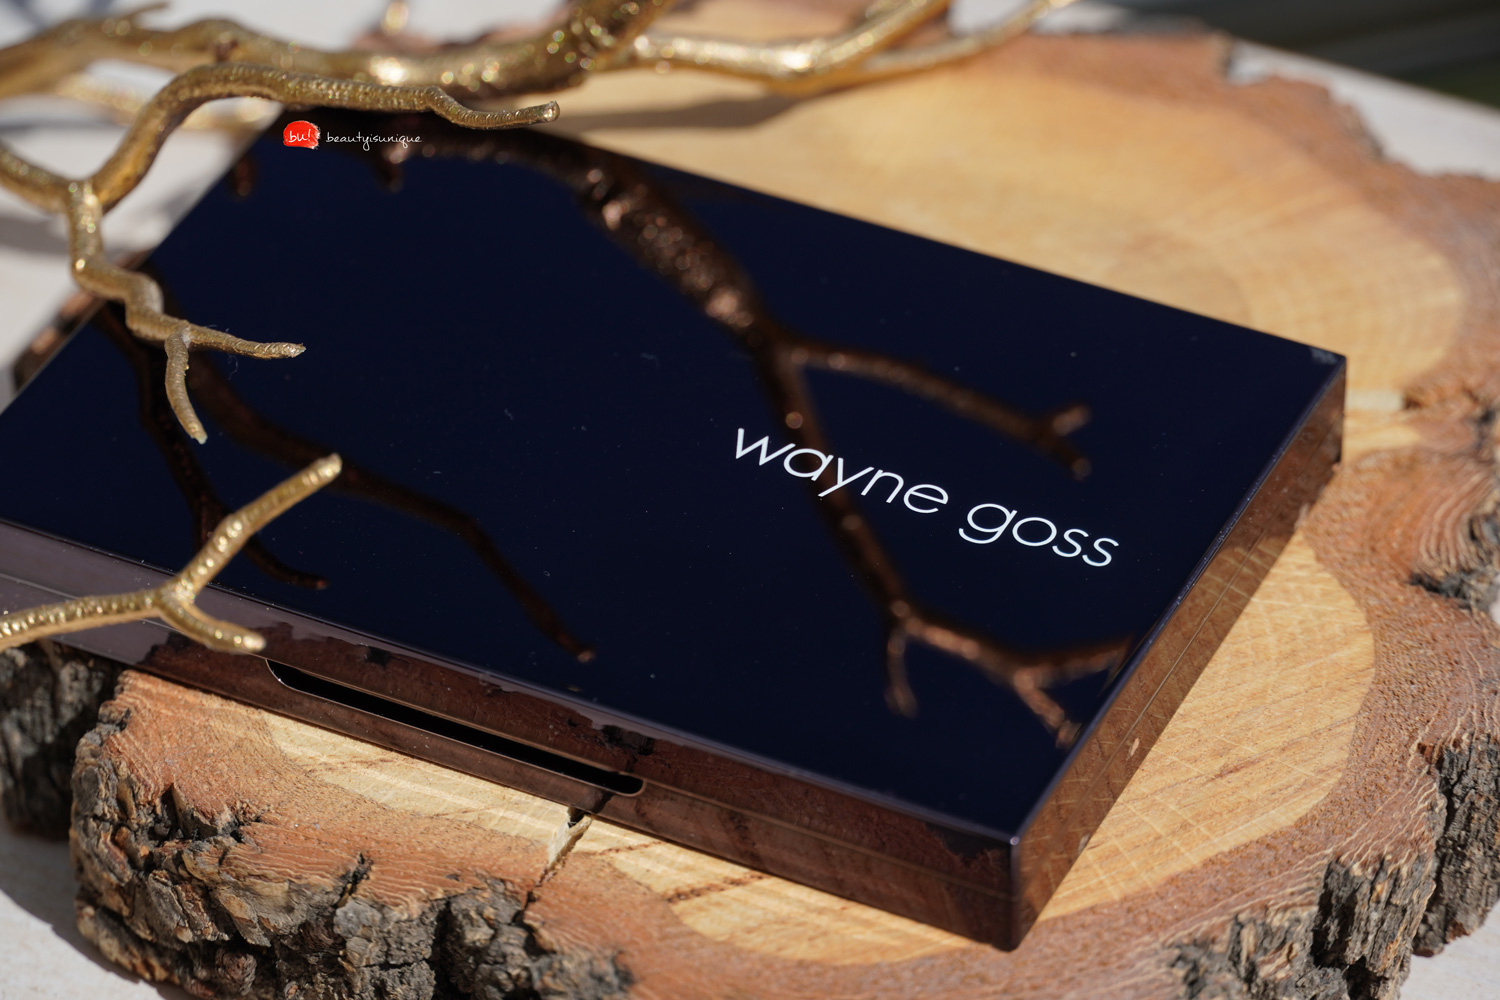 Wayne-goss-imperial-topaz-the-luxury-eye-palette